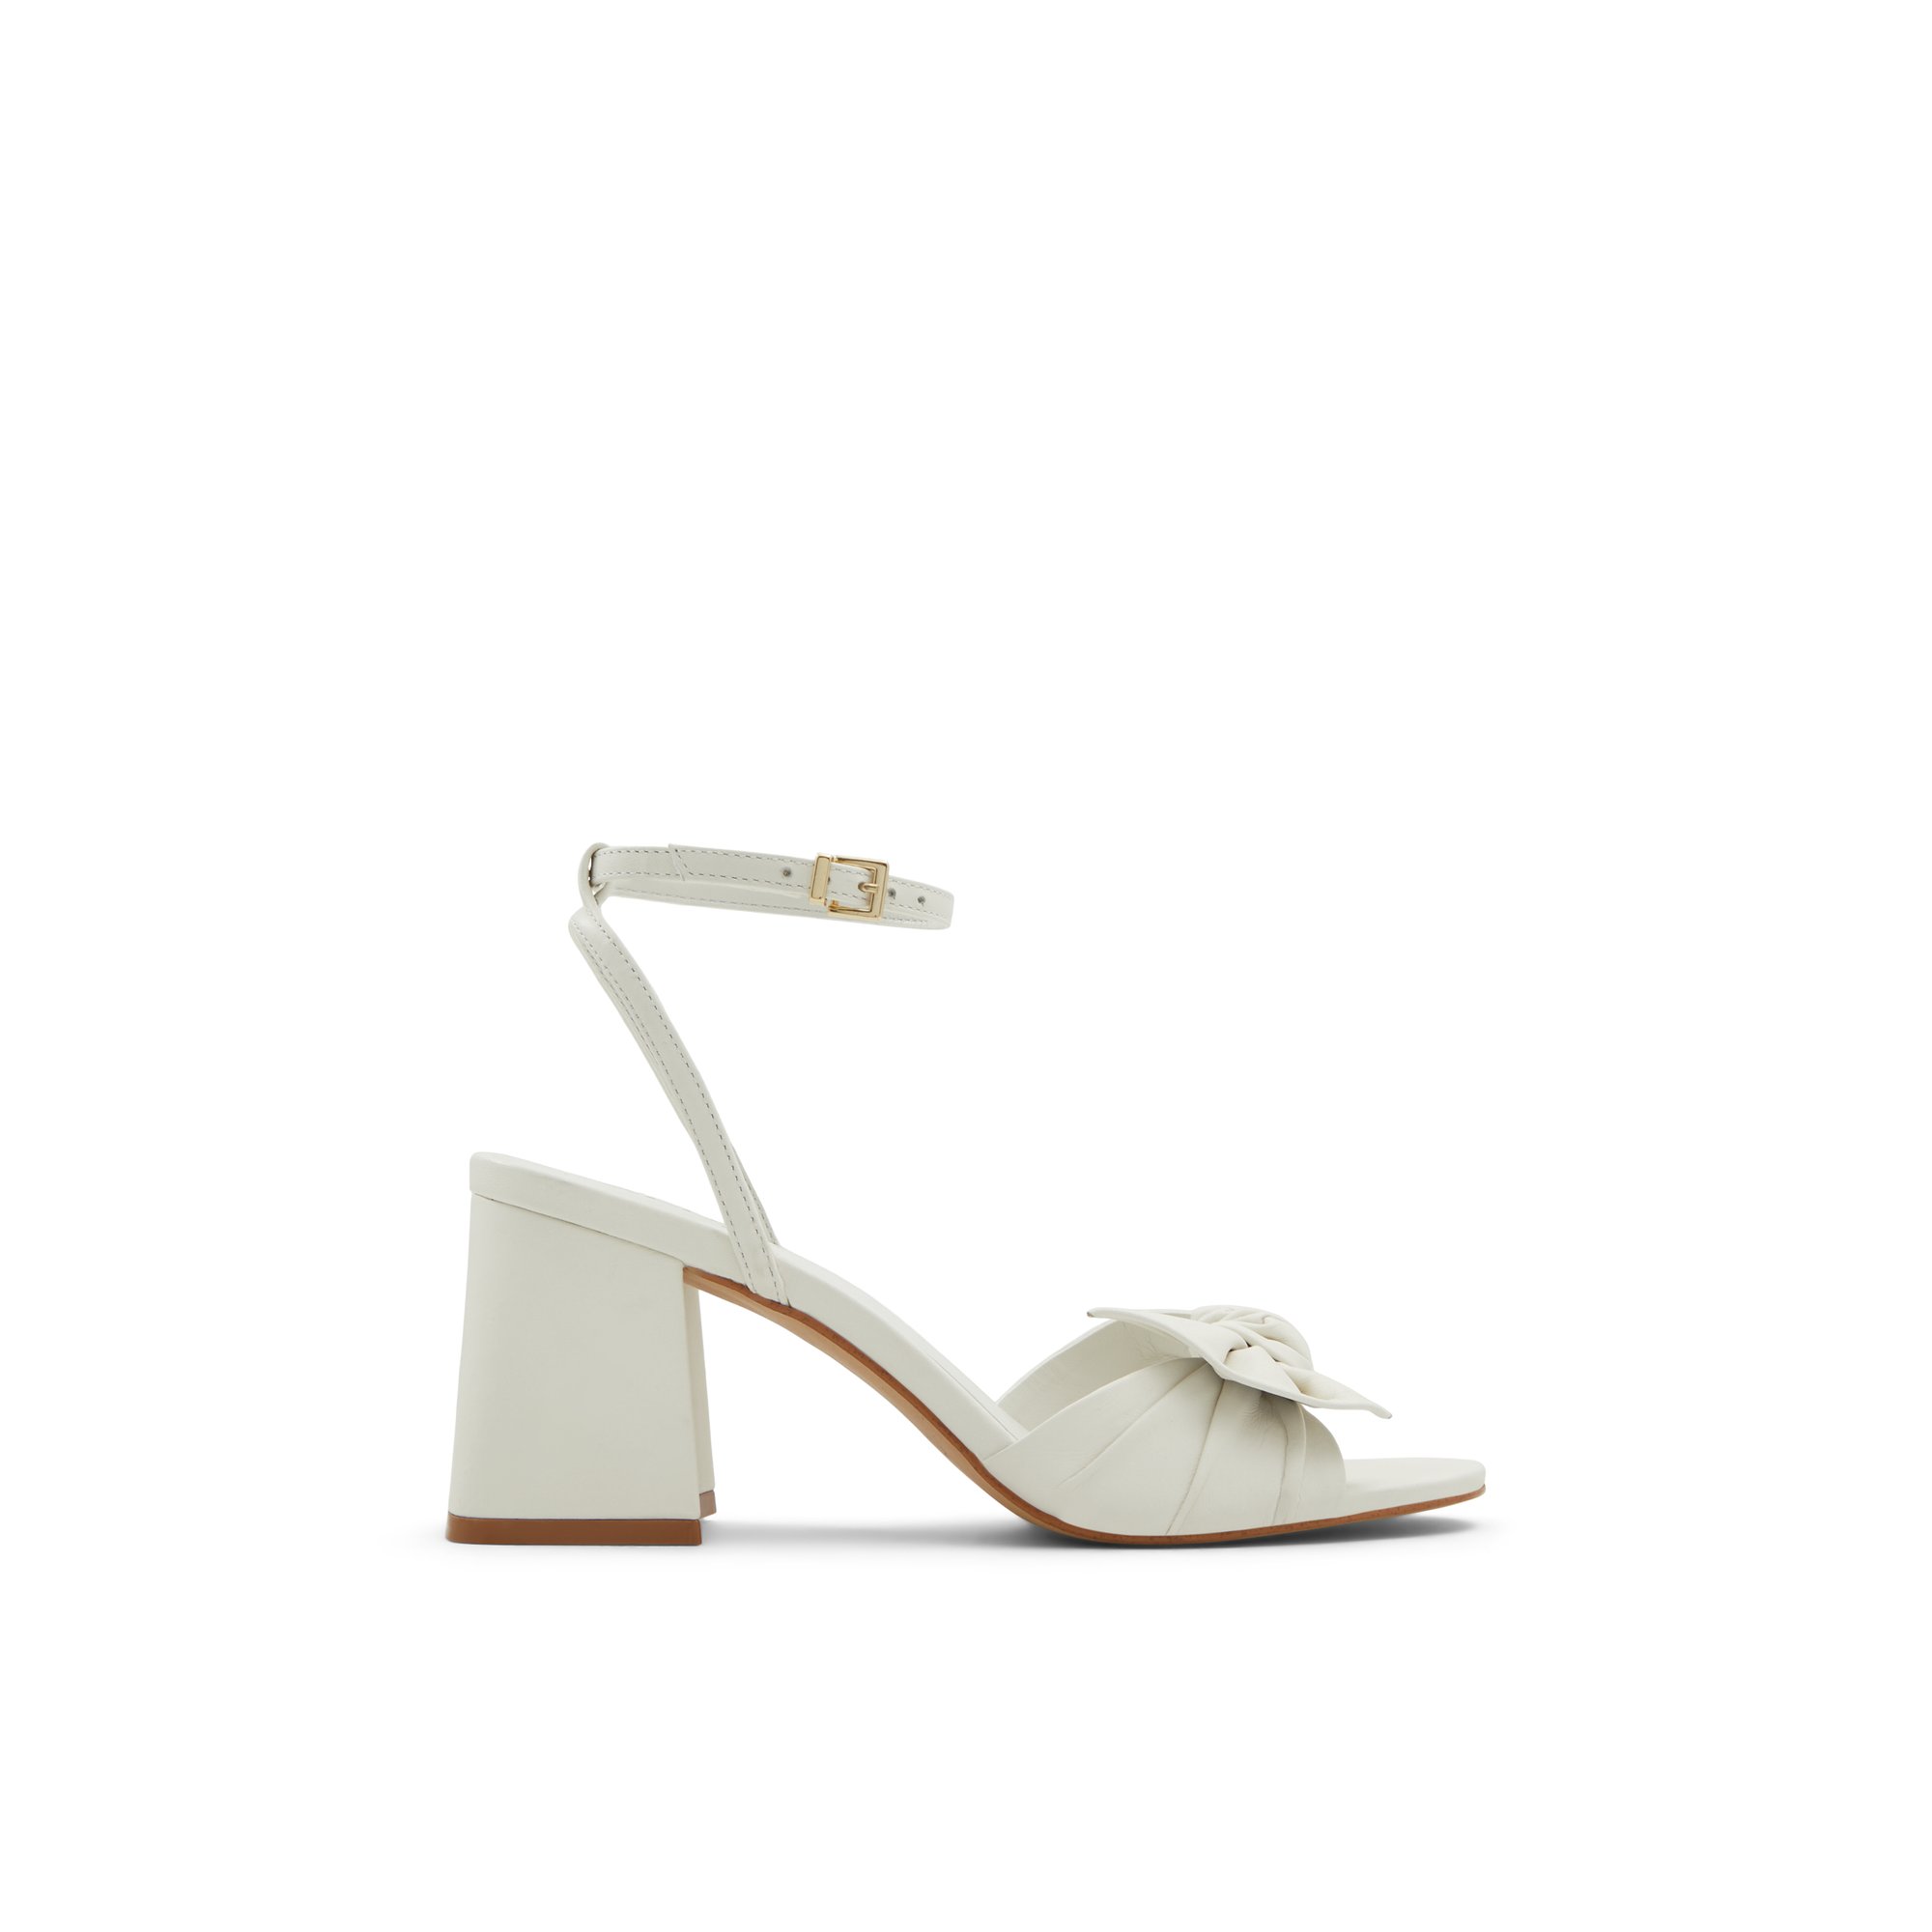 ALDO Angelbow - Women's Strappy Sandal Sandals - White